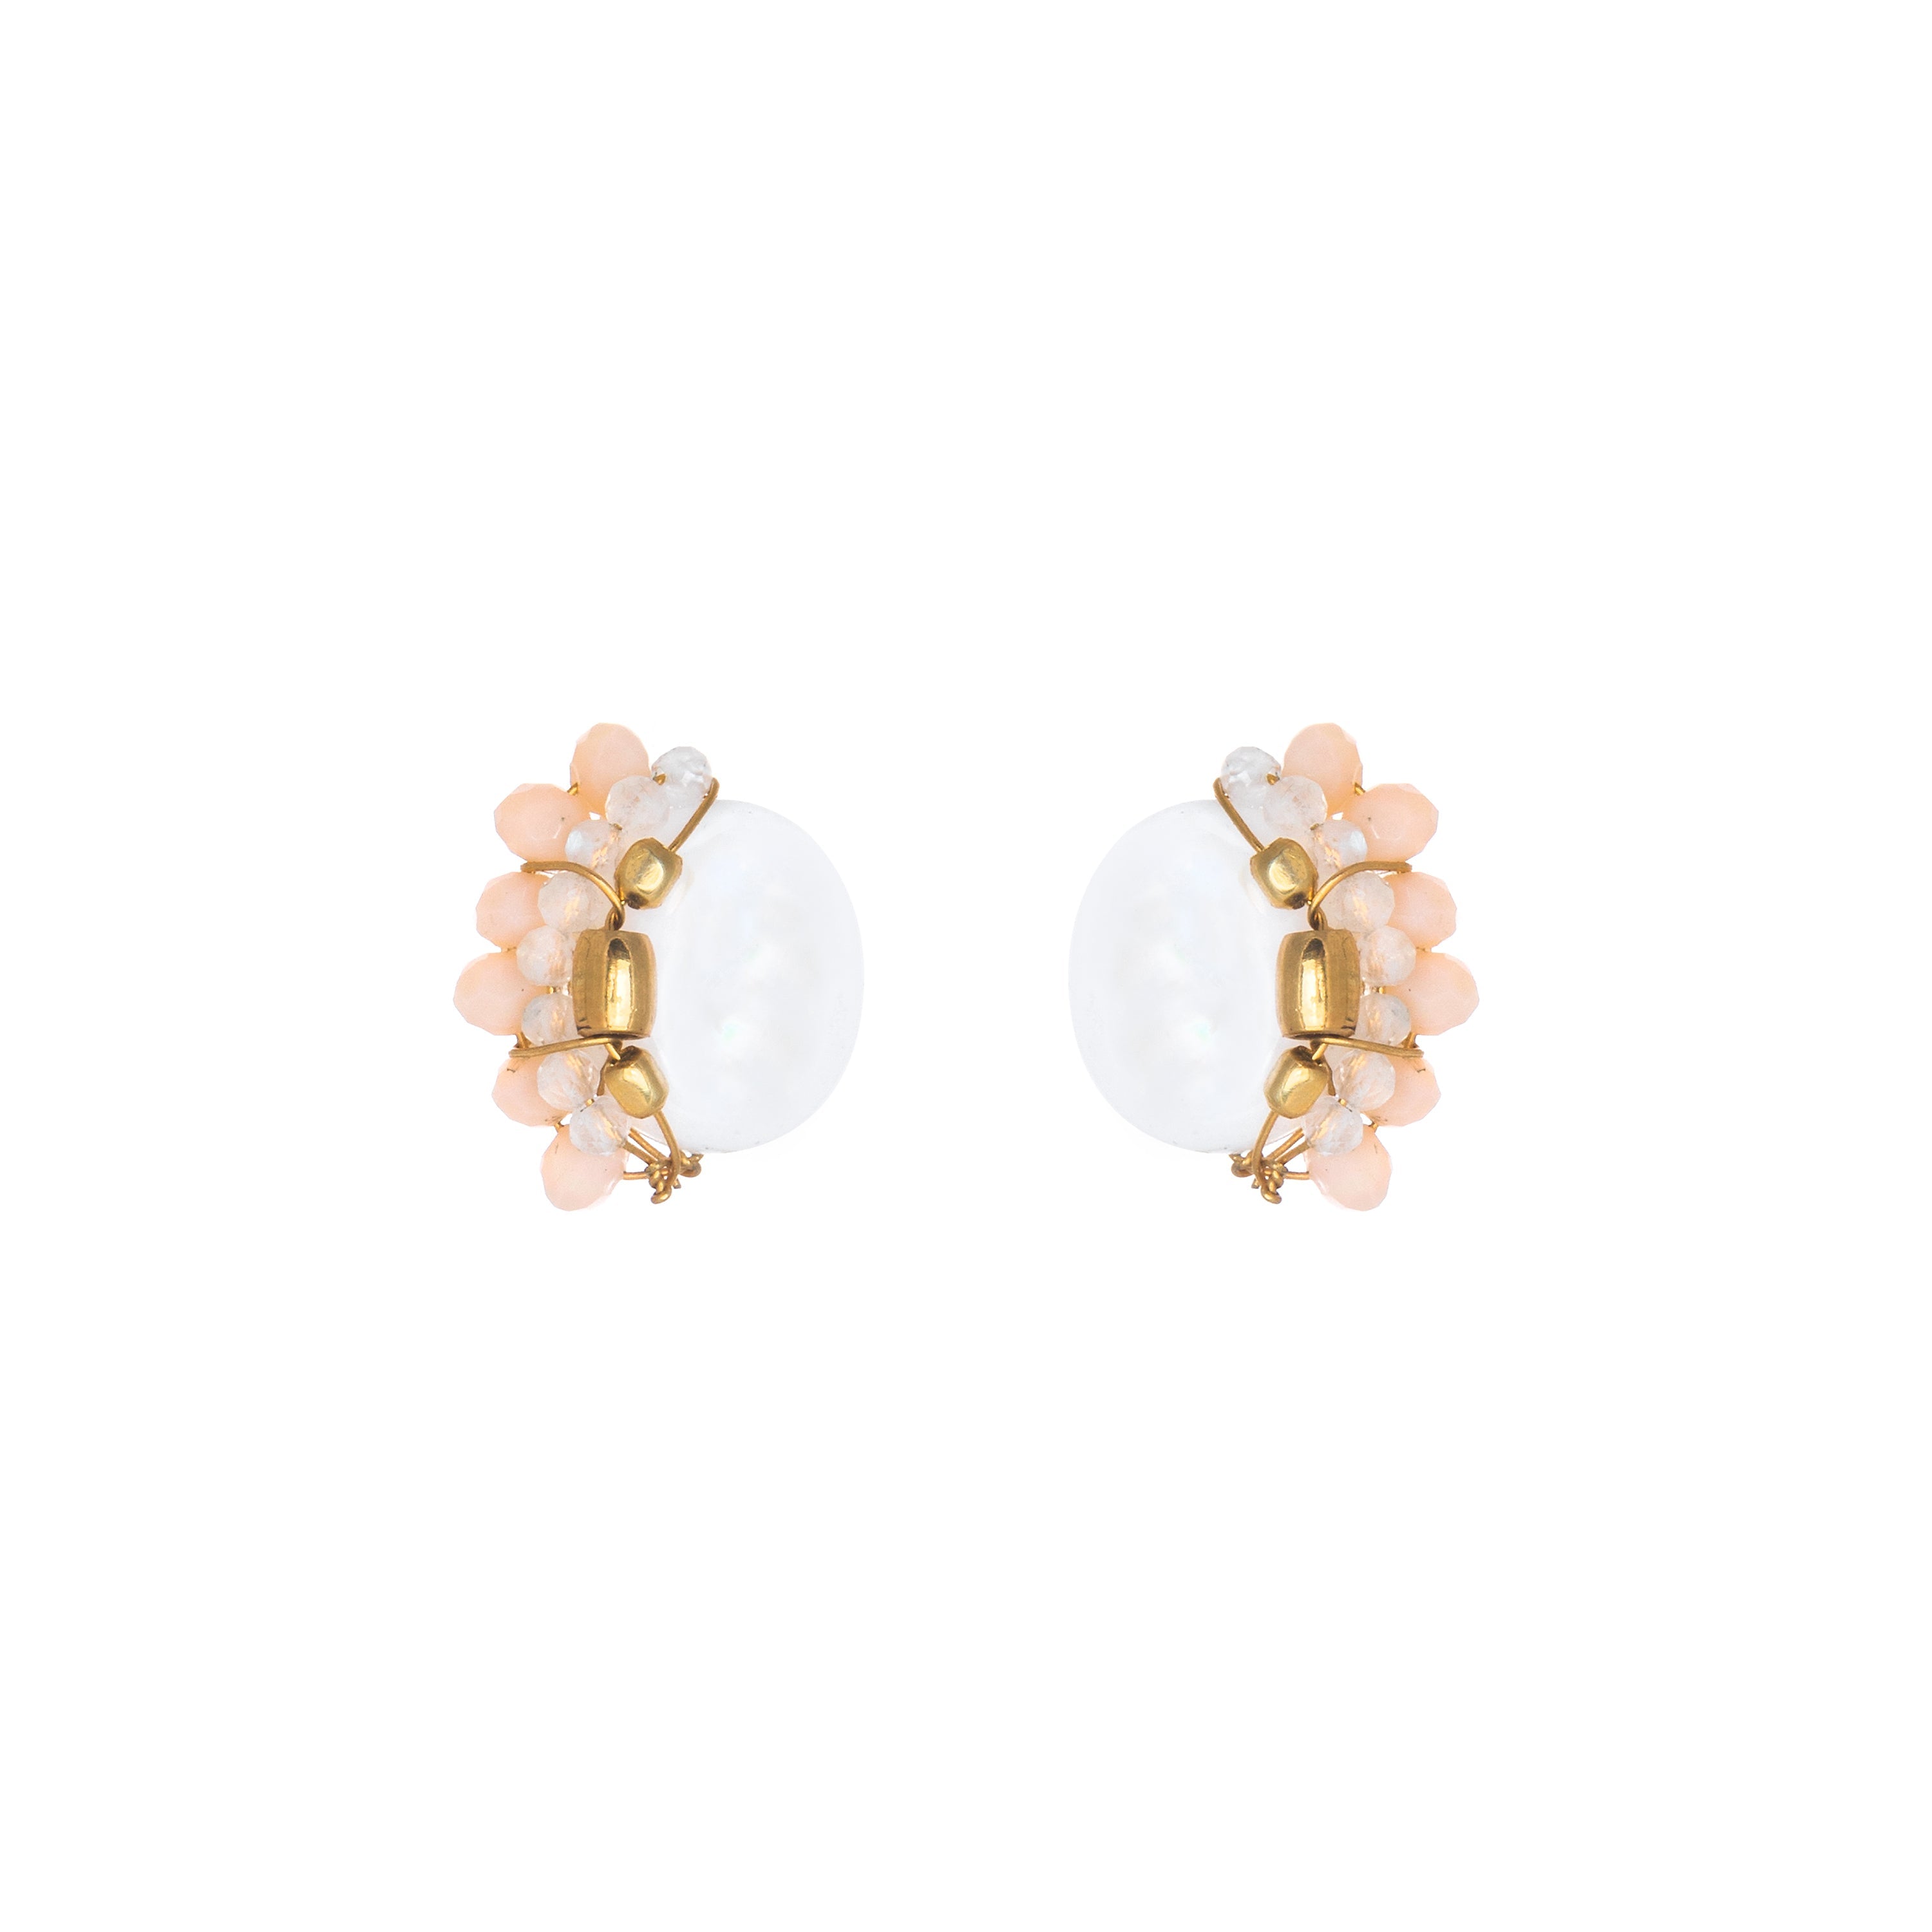 THE MARIANNA Earrings Jimena Alejandra Brass White Agate (Seashell) 